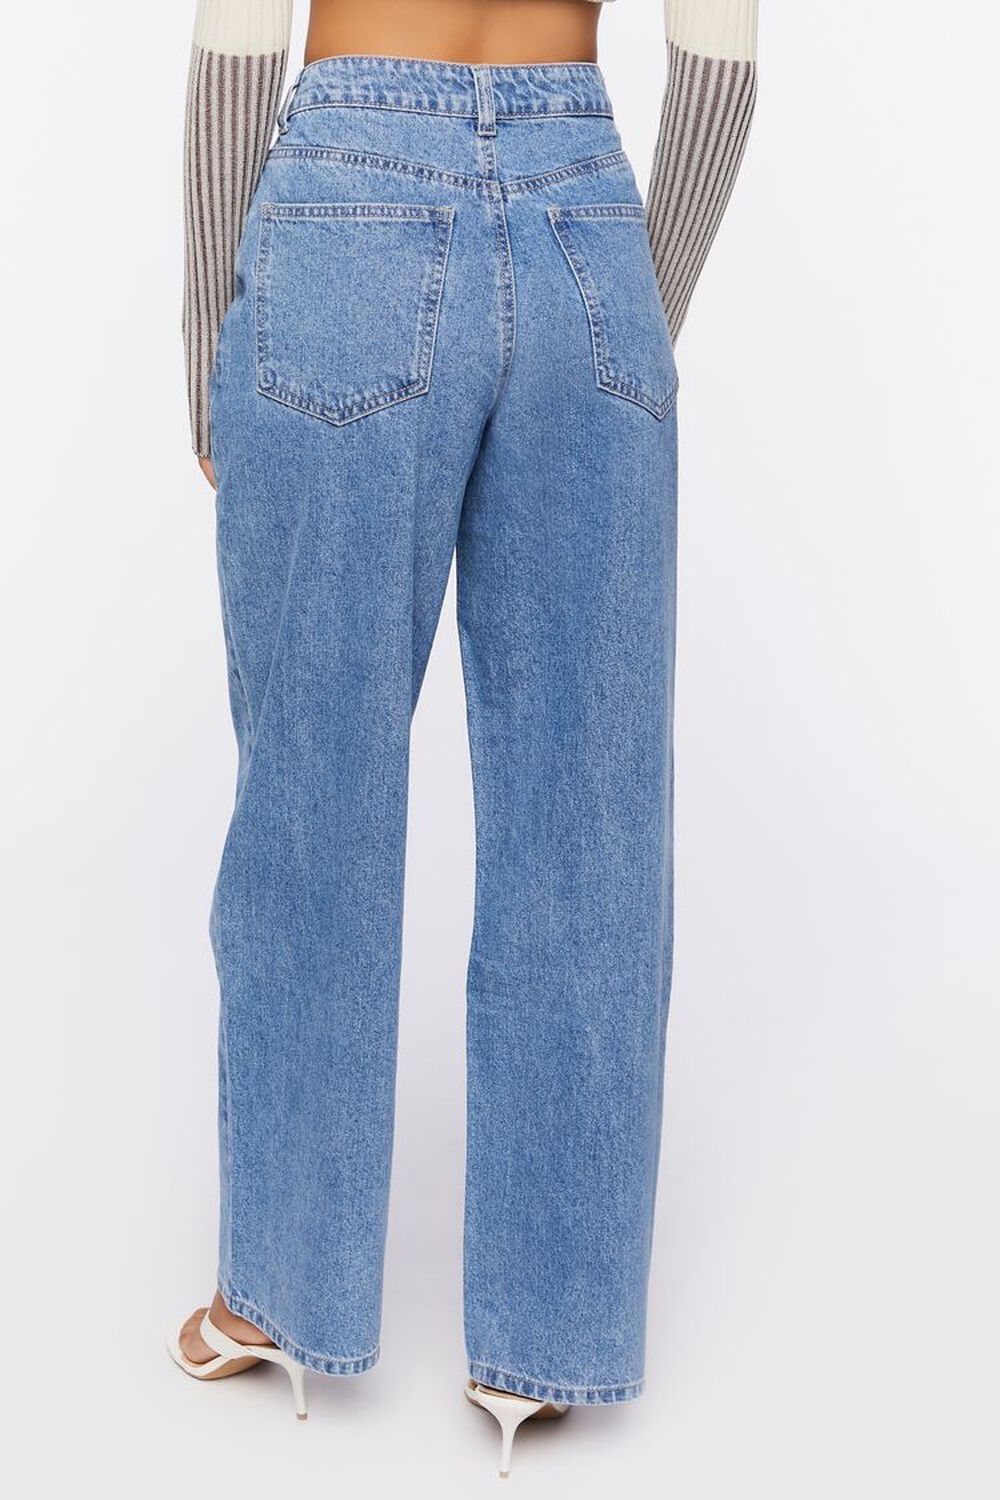 MEDIUM DENIM Straight-Leg 90s Jeans, image 3